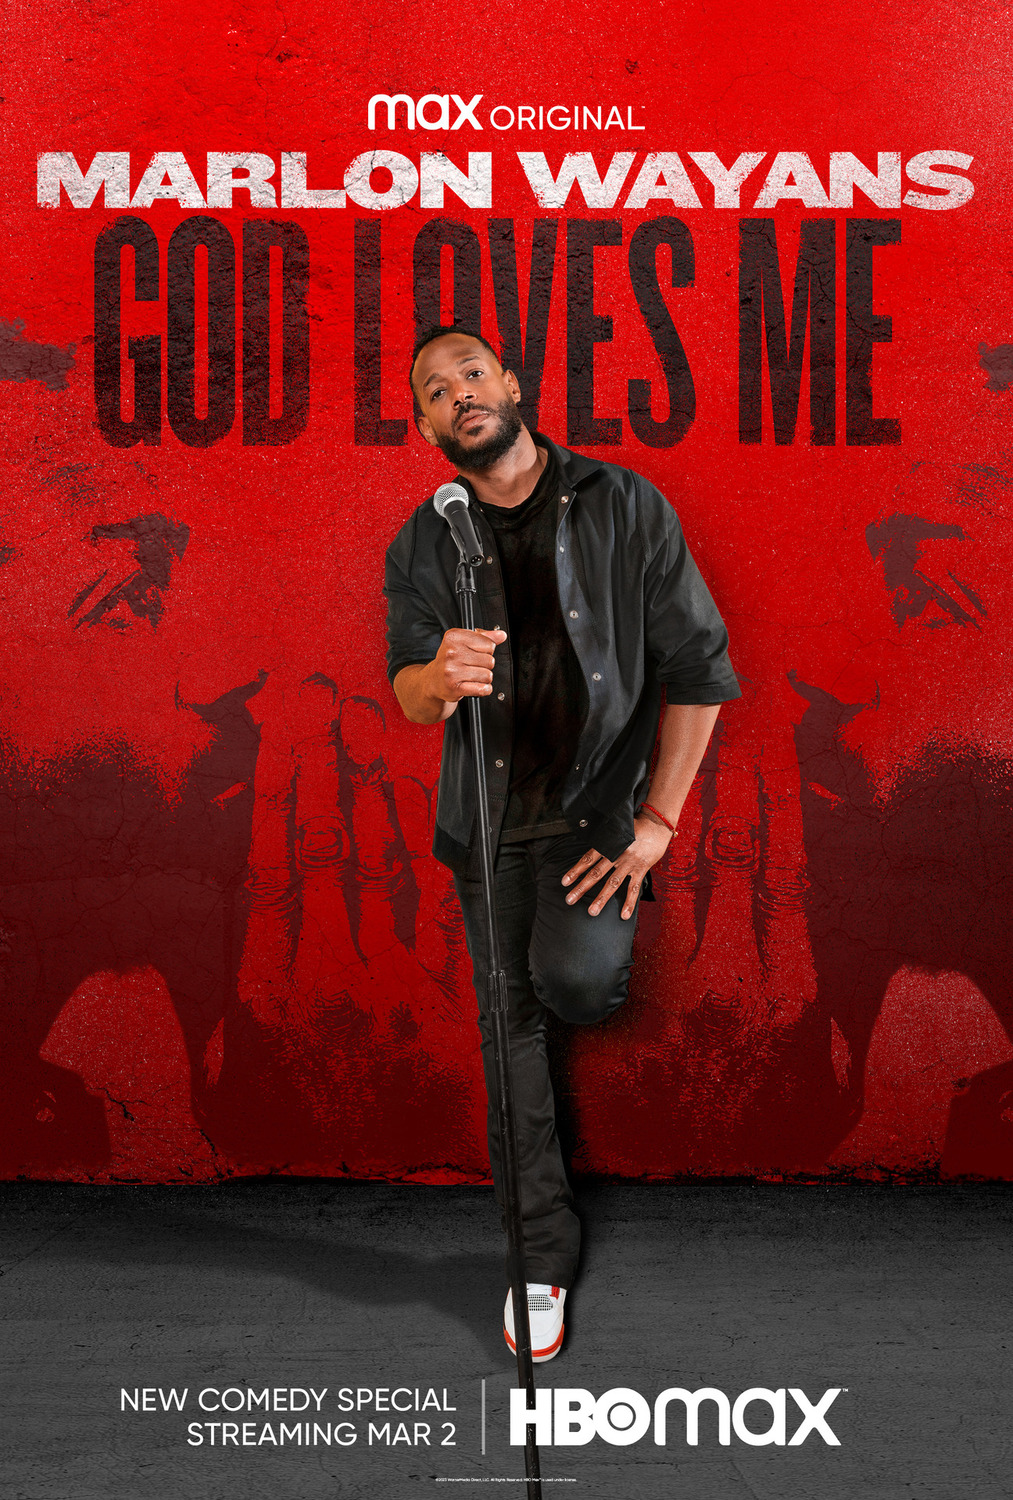 Extra Large TV Poster Image for Marlon Wayans: God Loves Me 